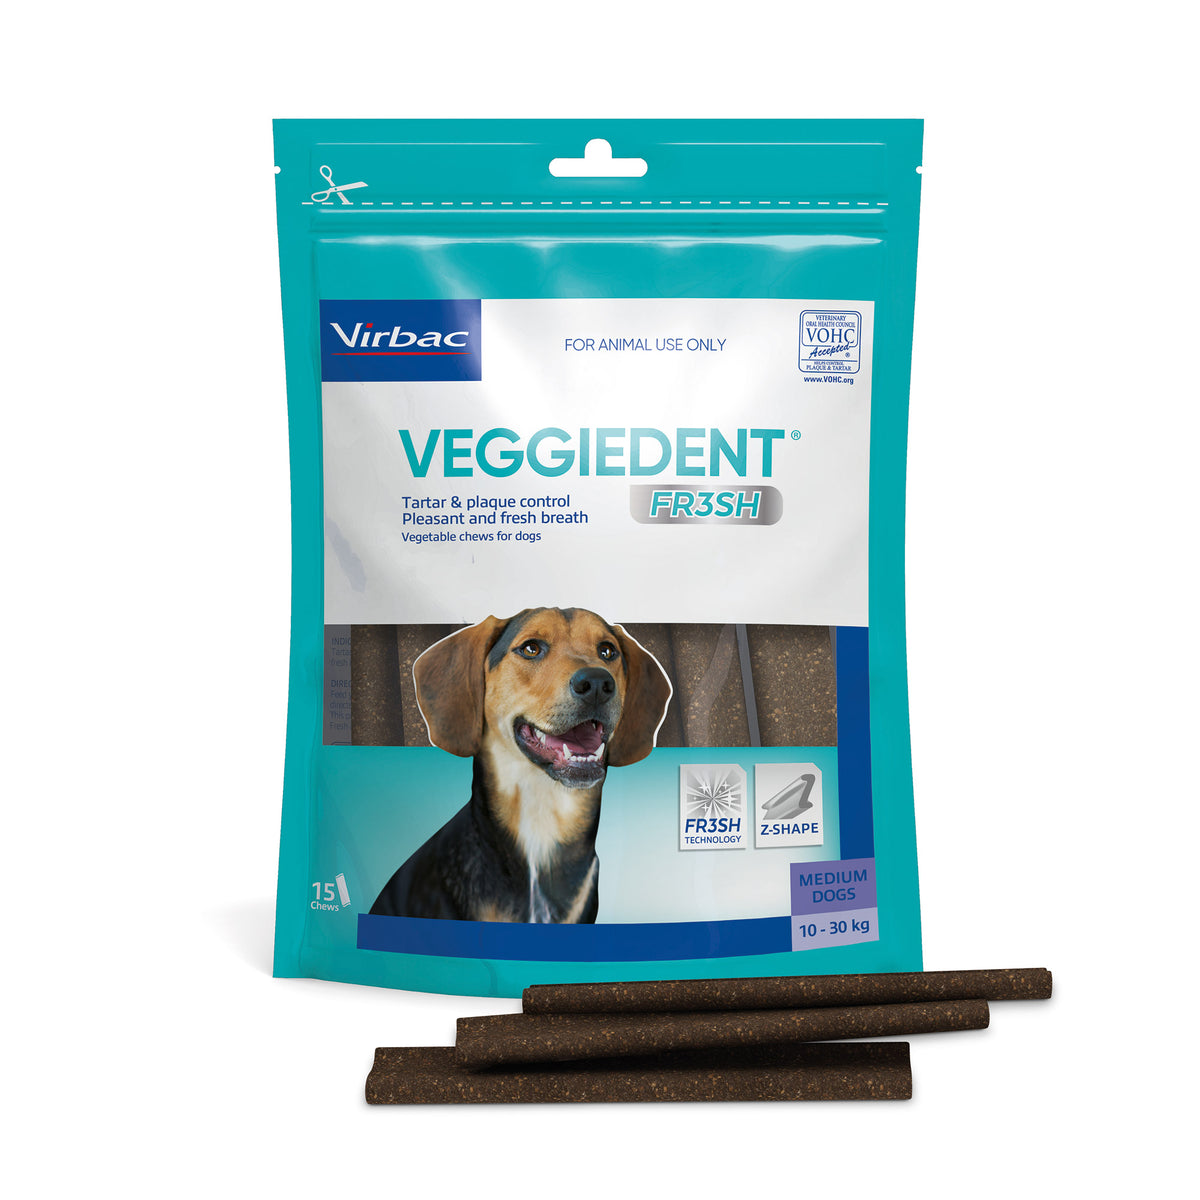 Virbac Veggiedent Dental Chews for Dogs